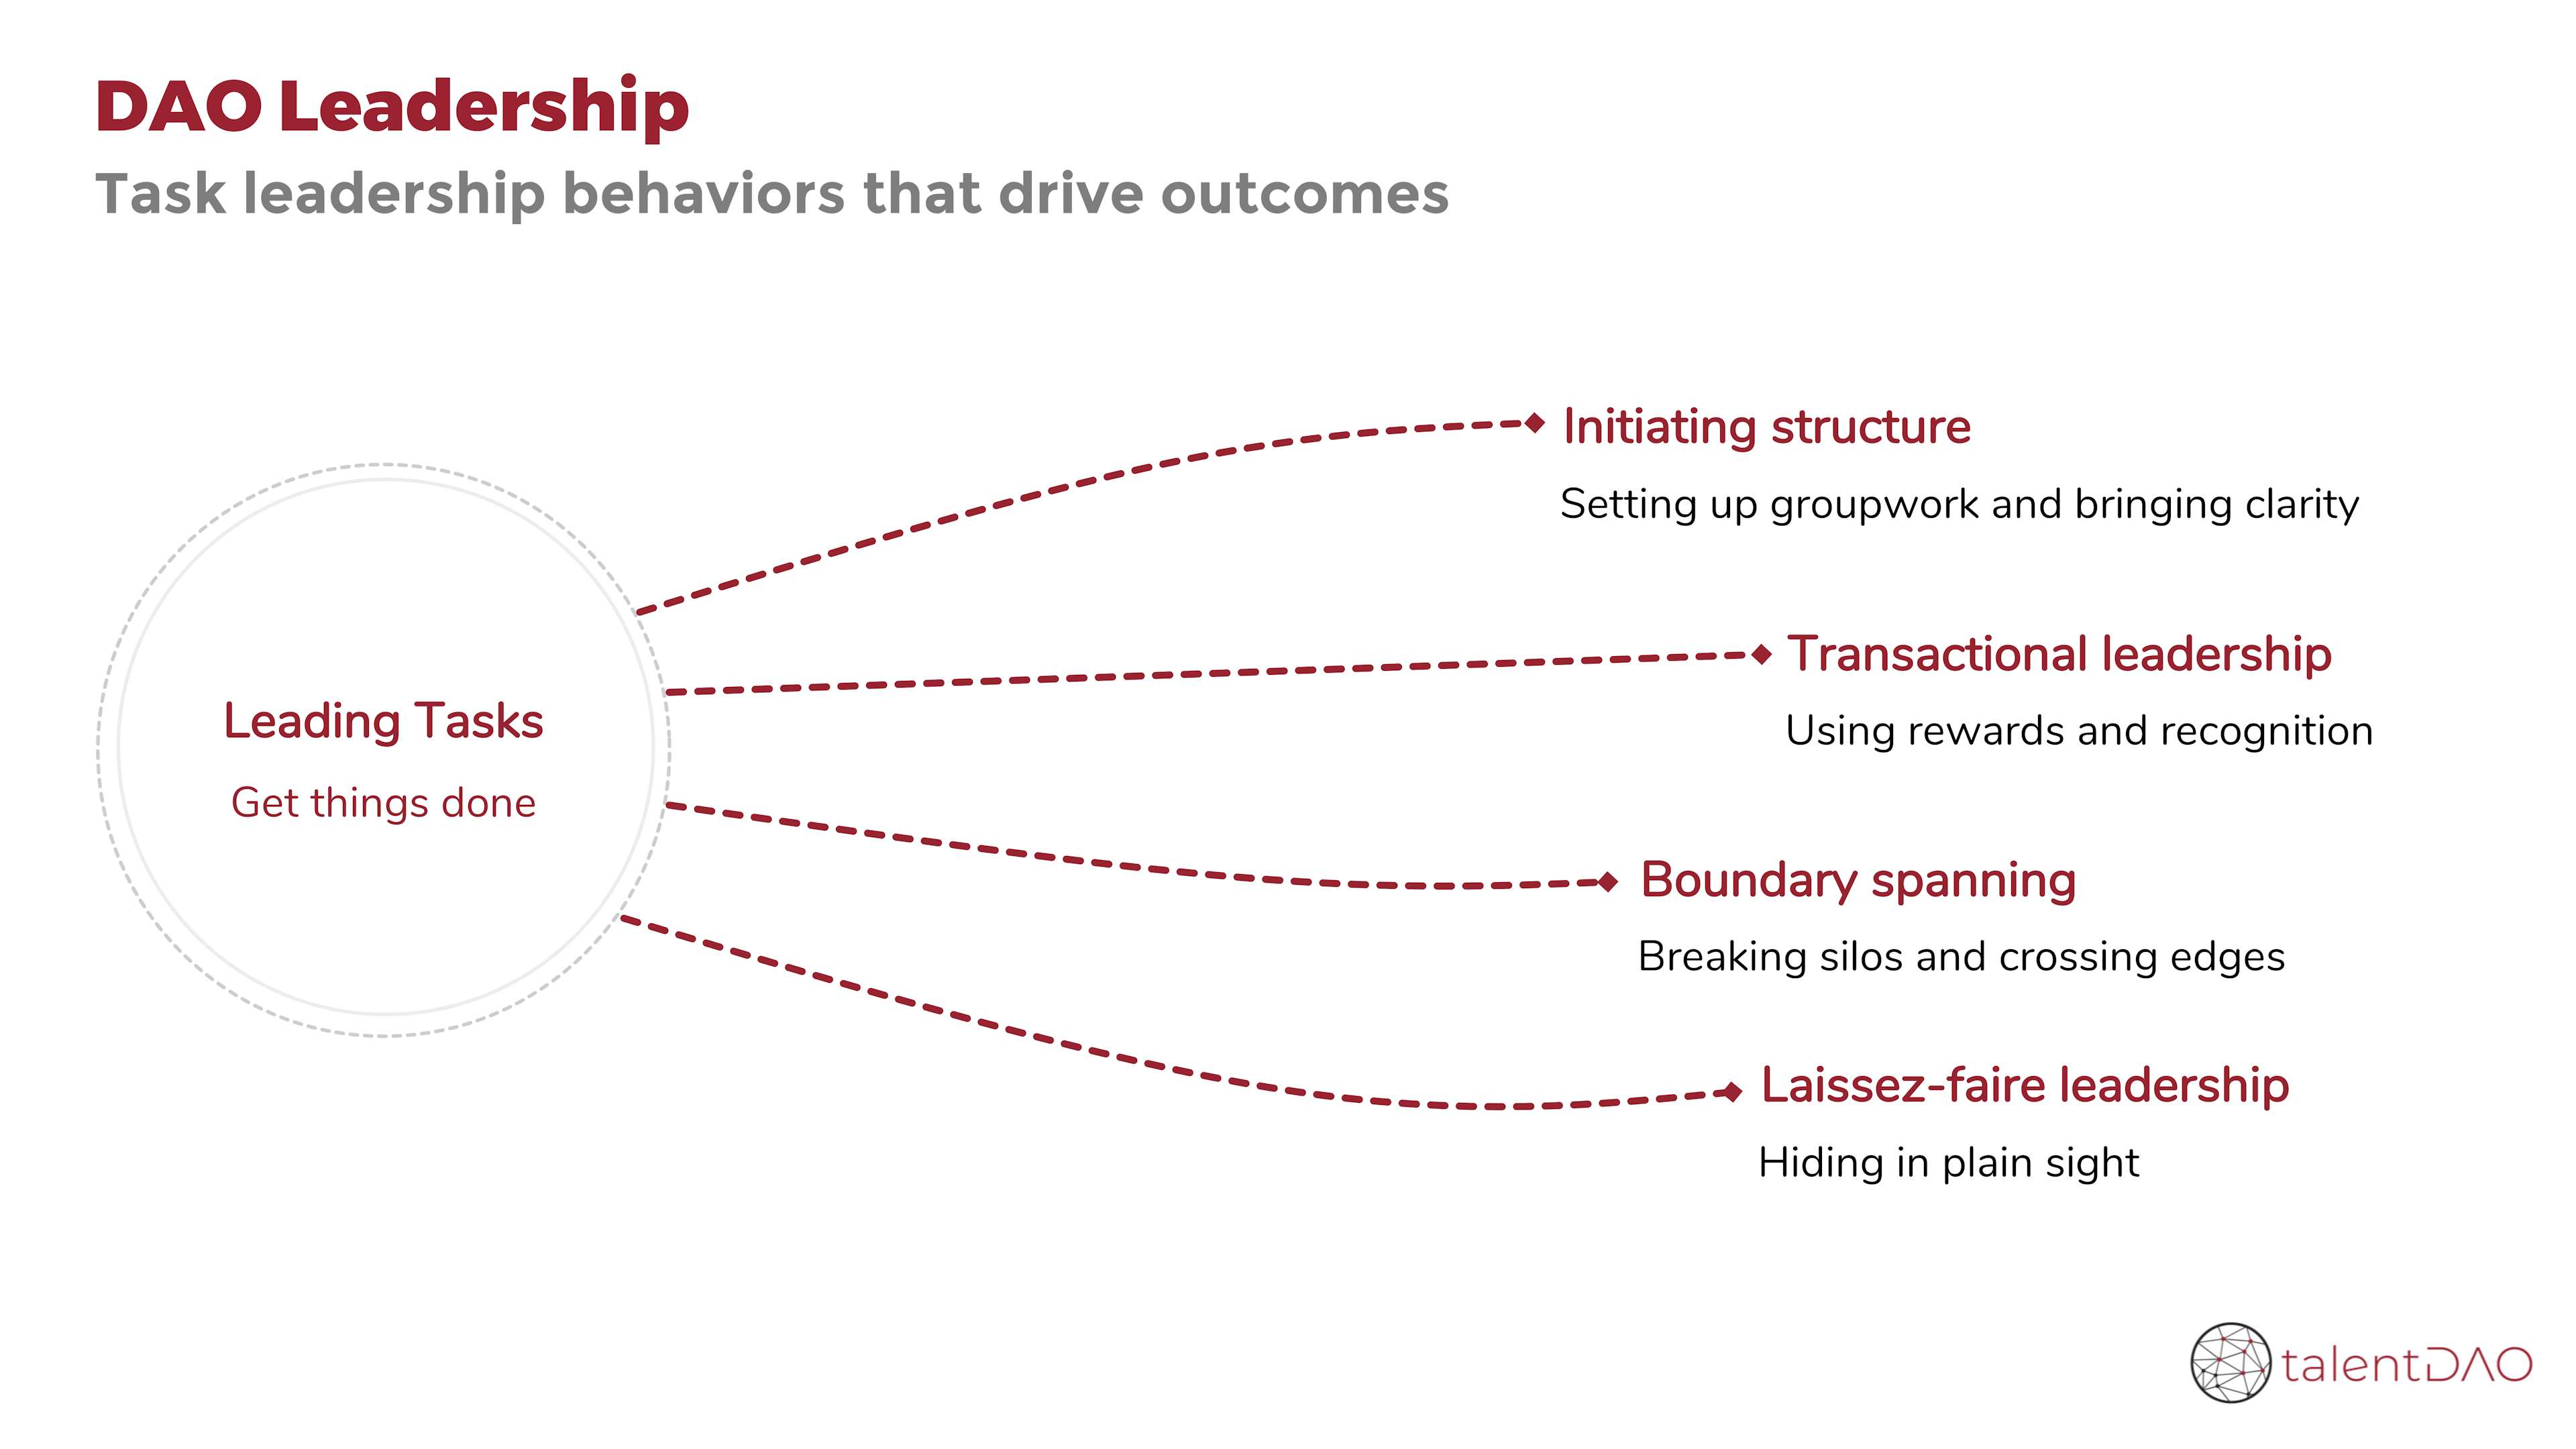 Task leadership behaviors that drive outcomes